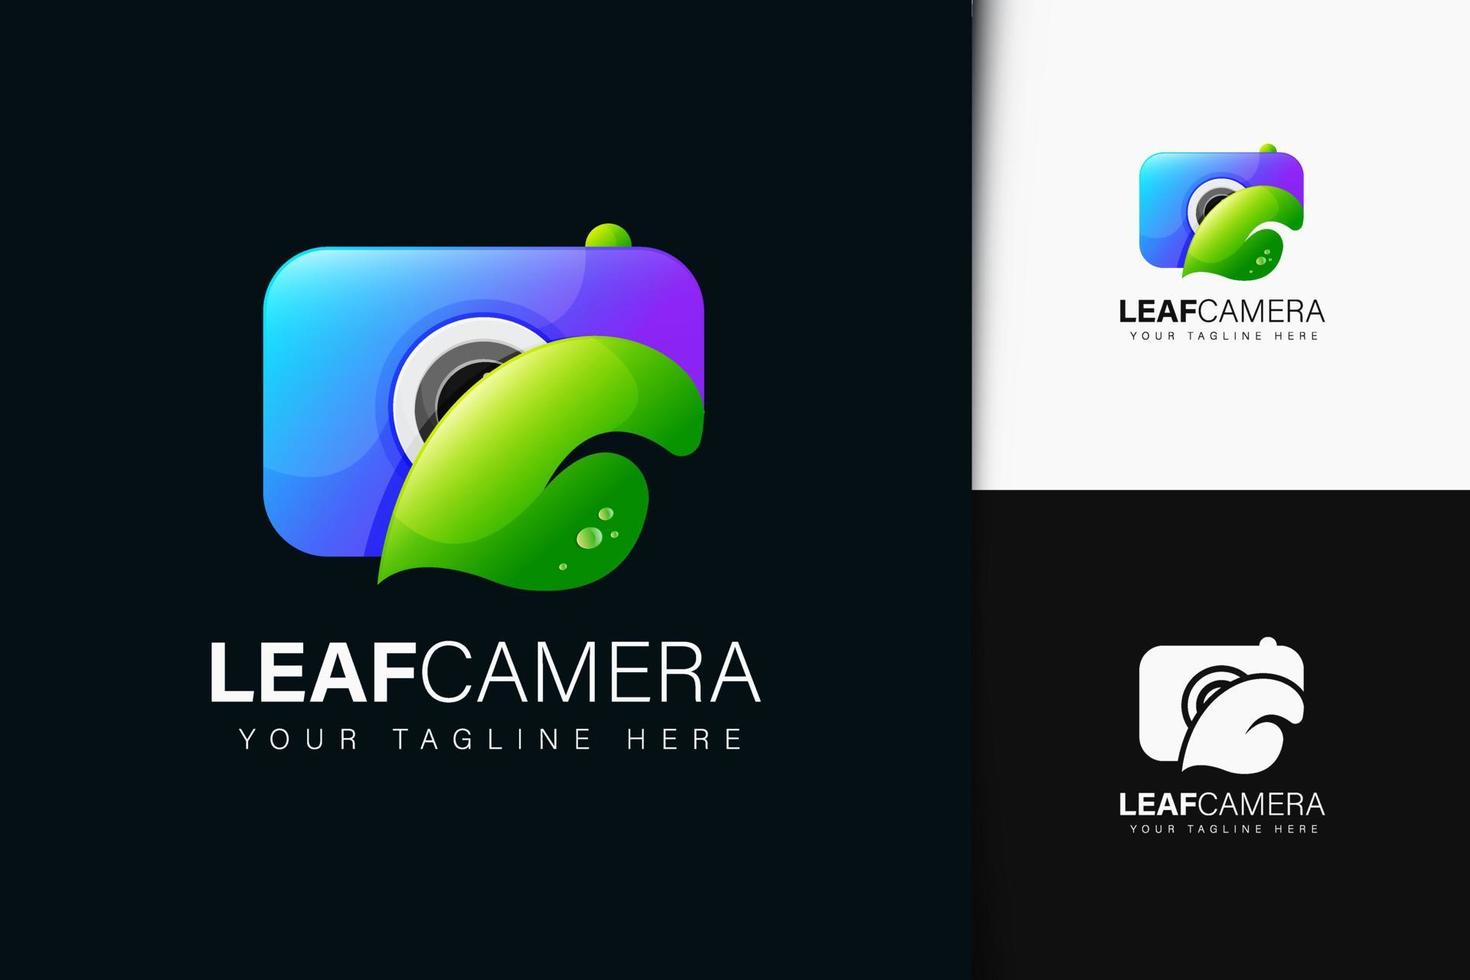 Leaf camera logo design with gradient vector